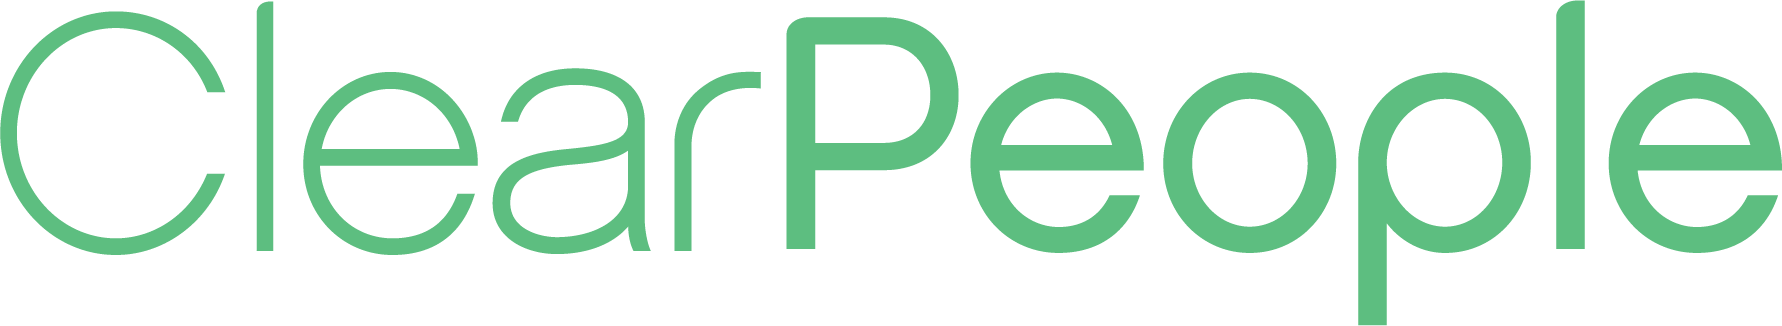 CP-LogoType_Green-1